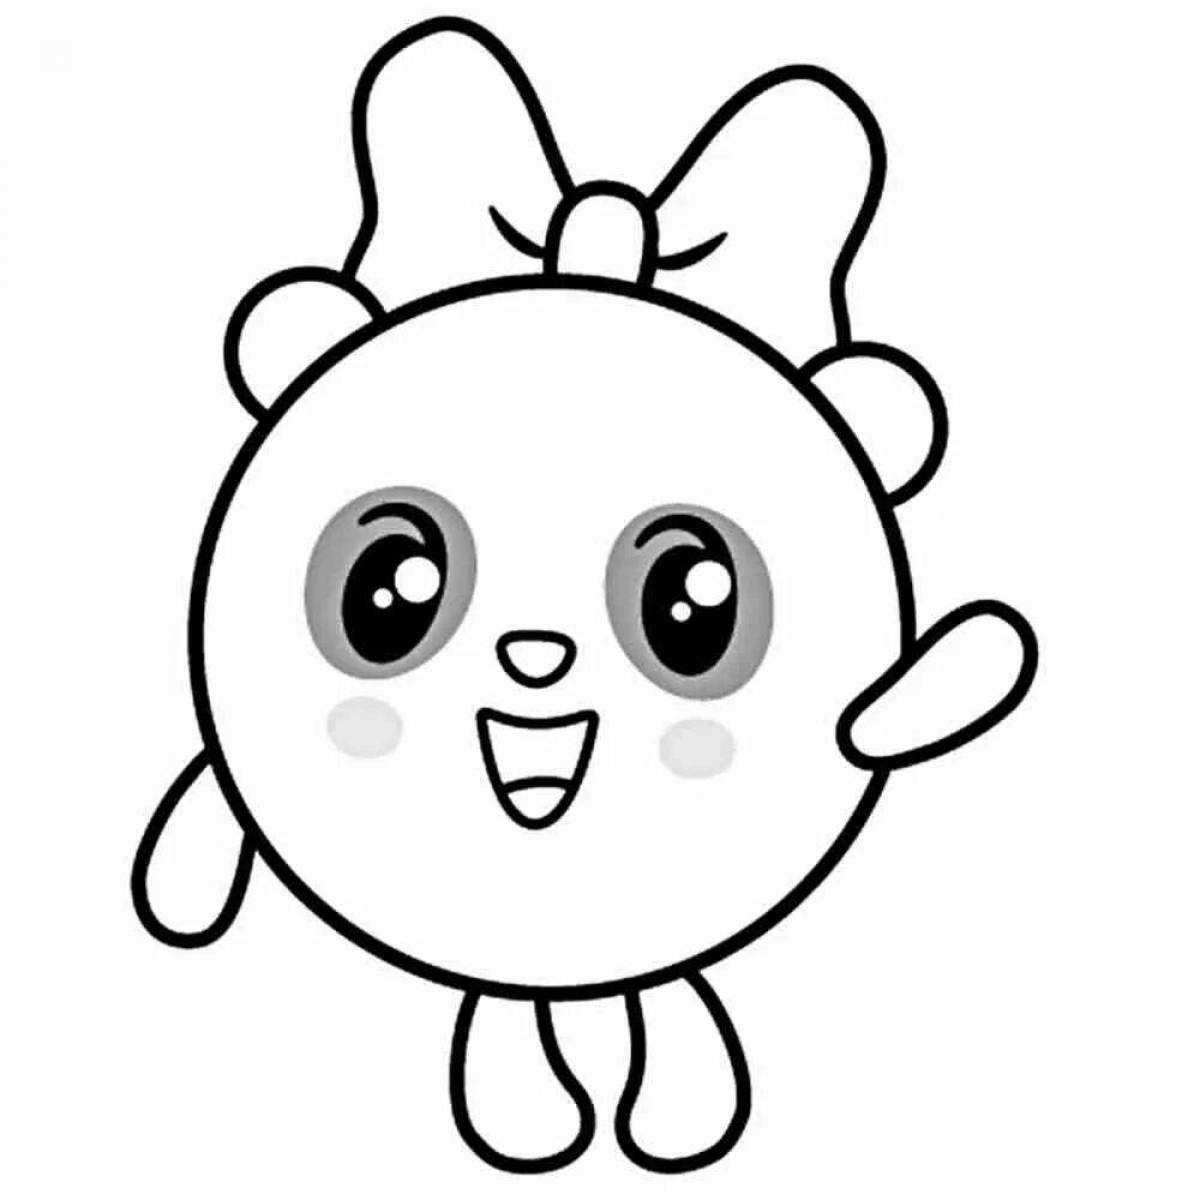 Baby balls panda #3